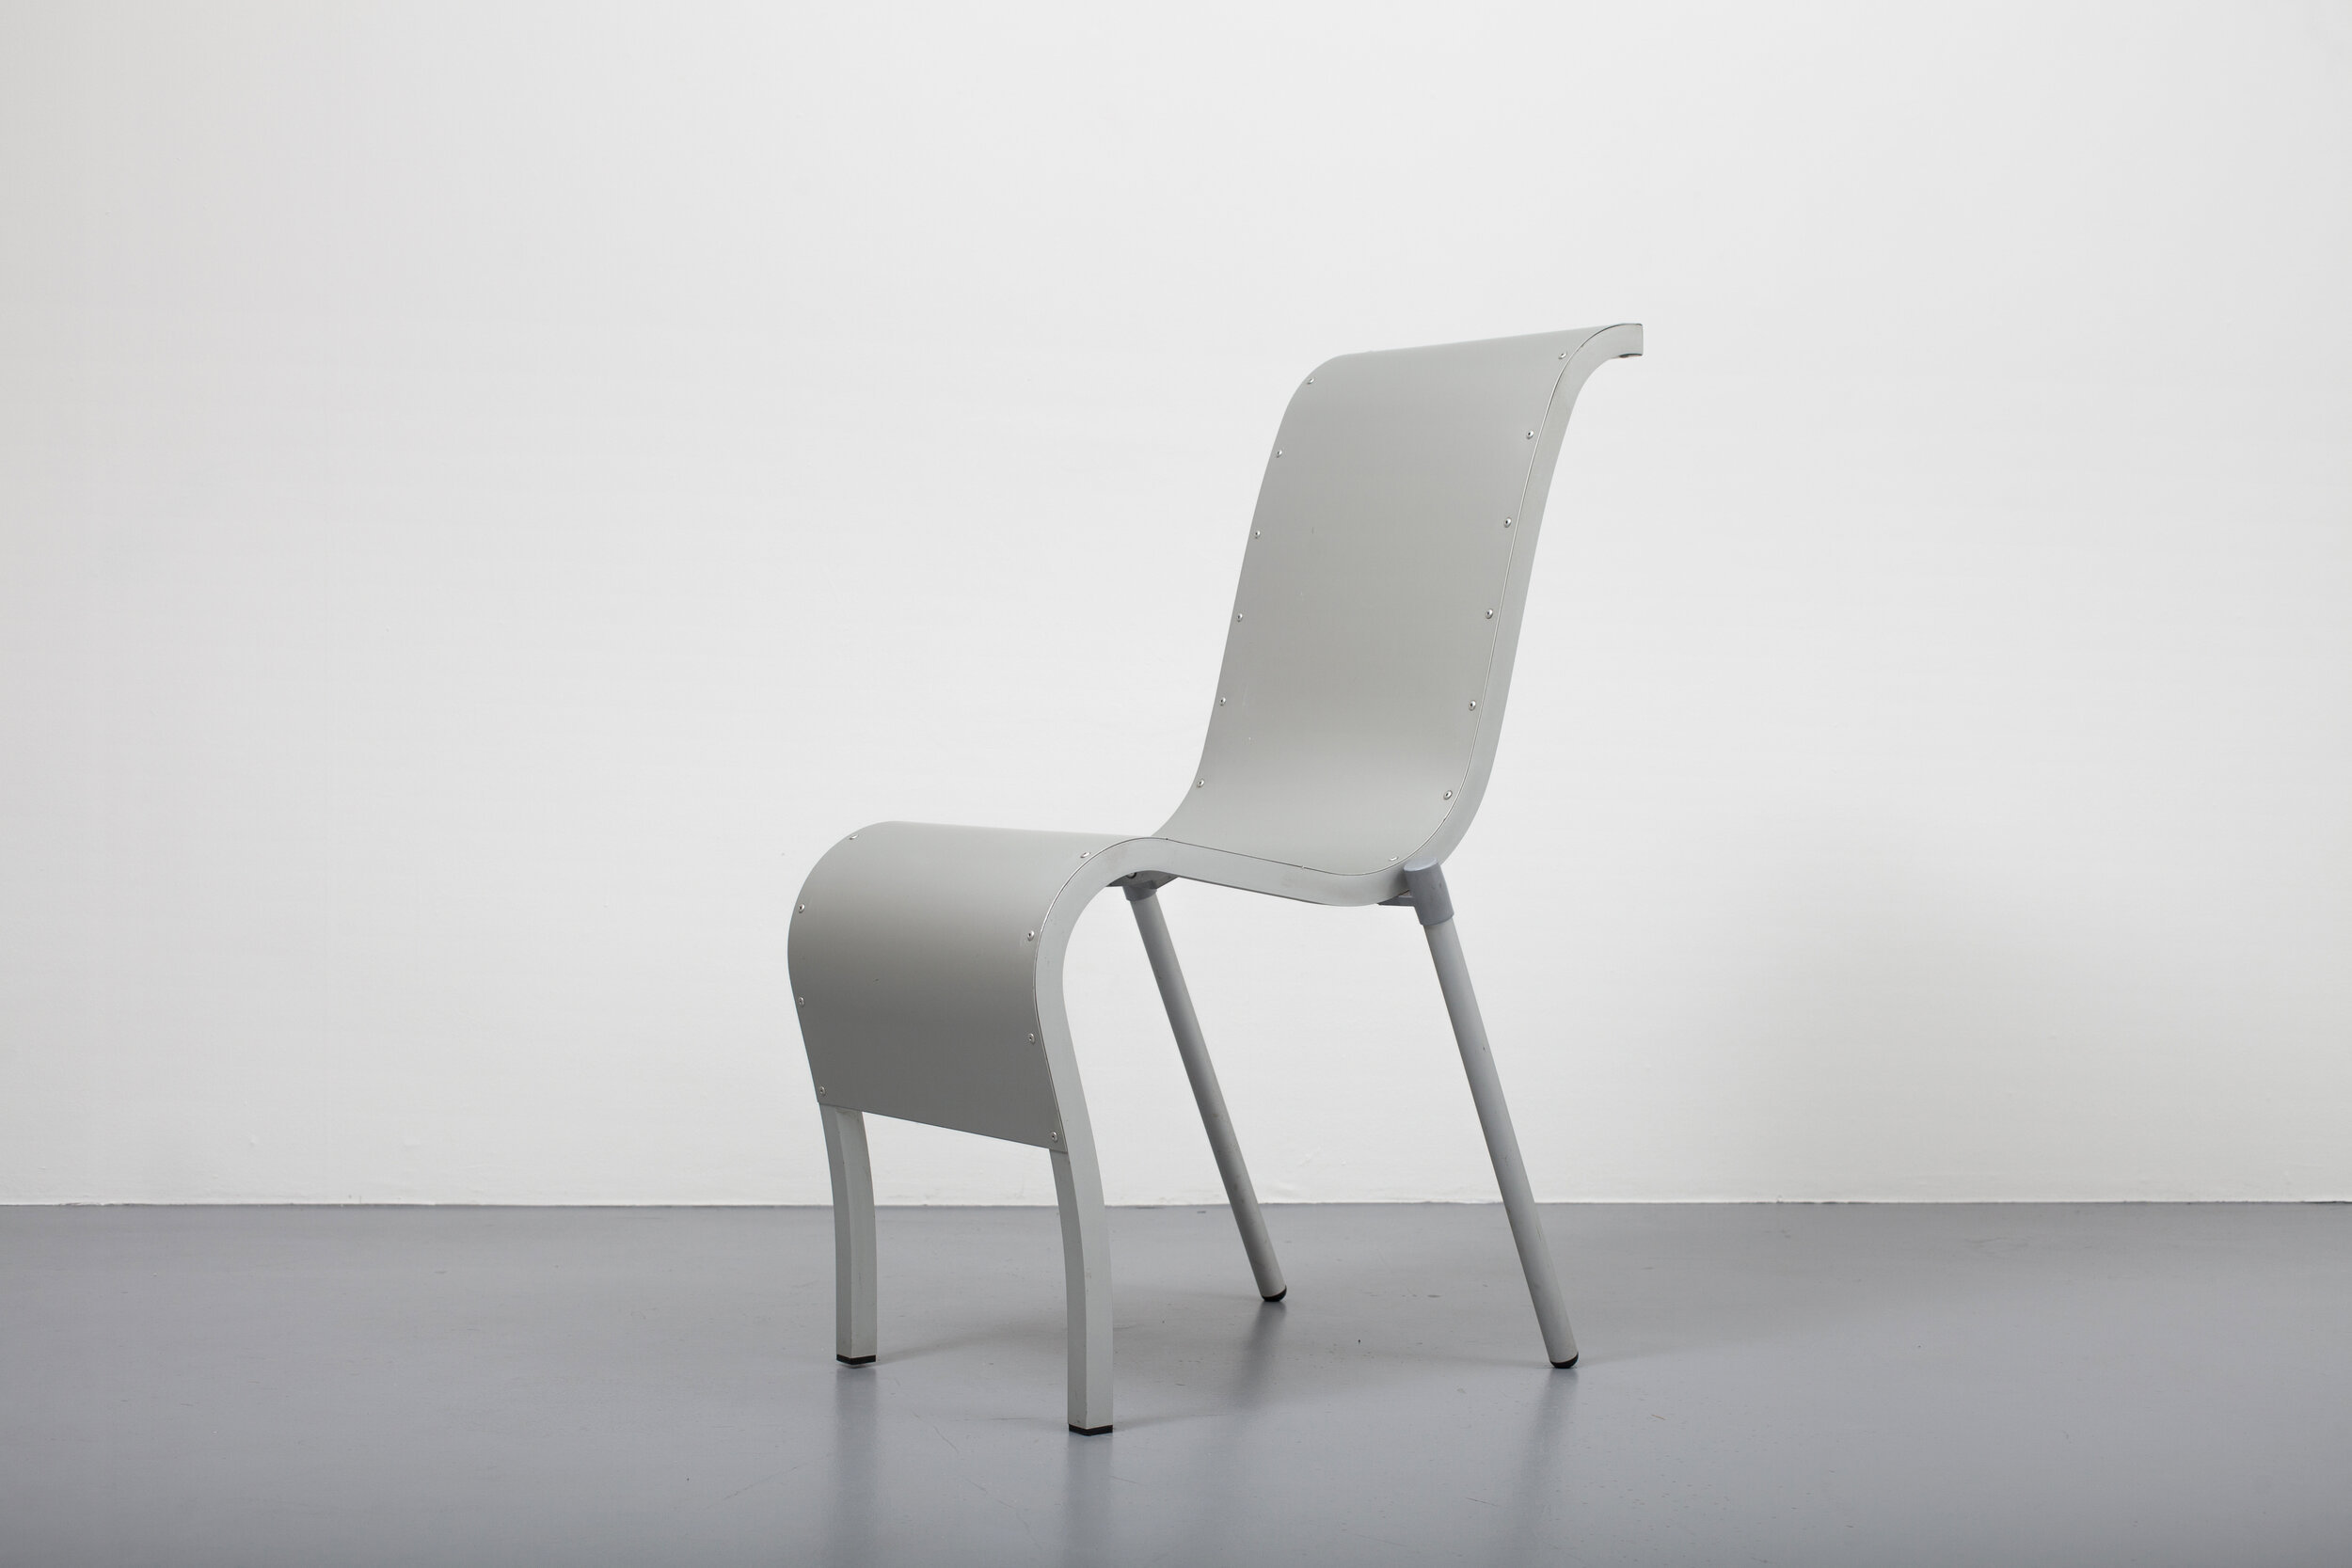   Philippe Starck, Romantica Chair  - A1043 